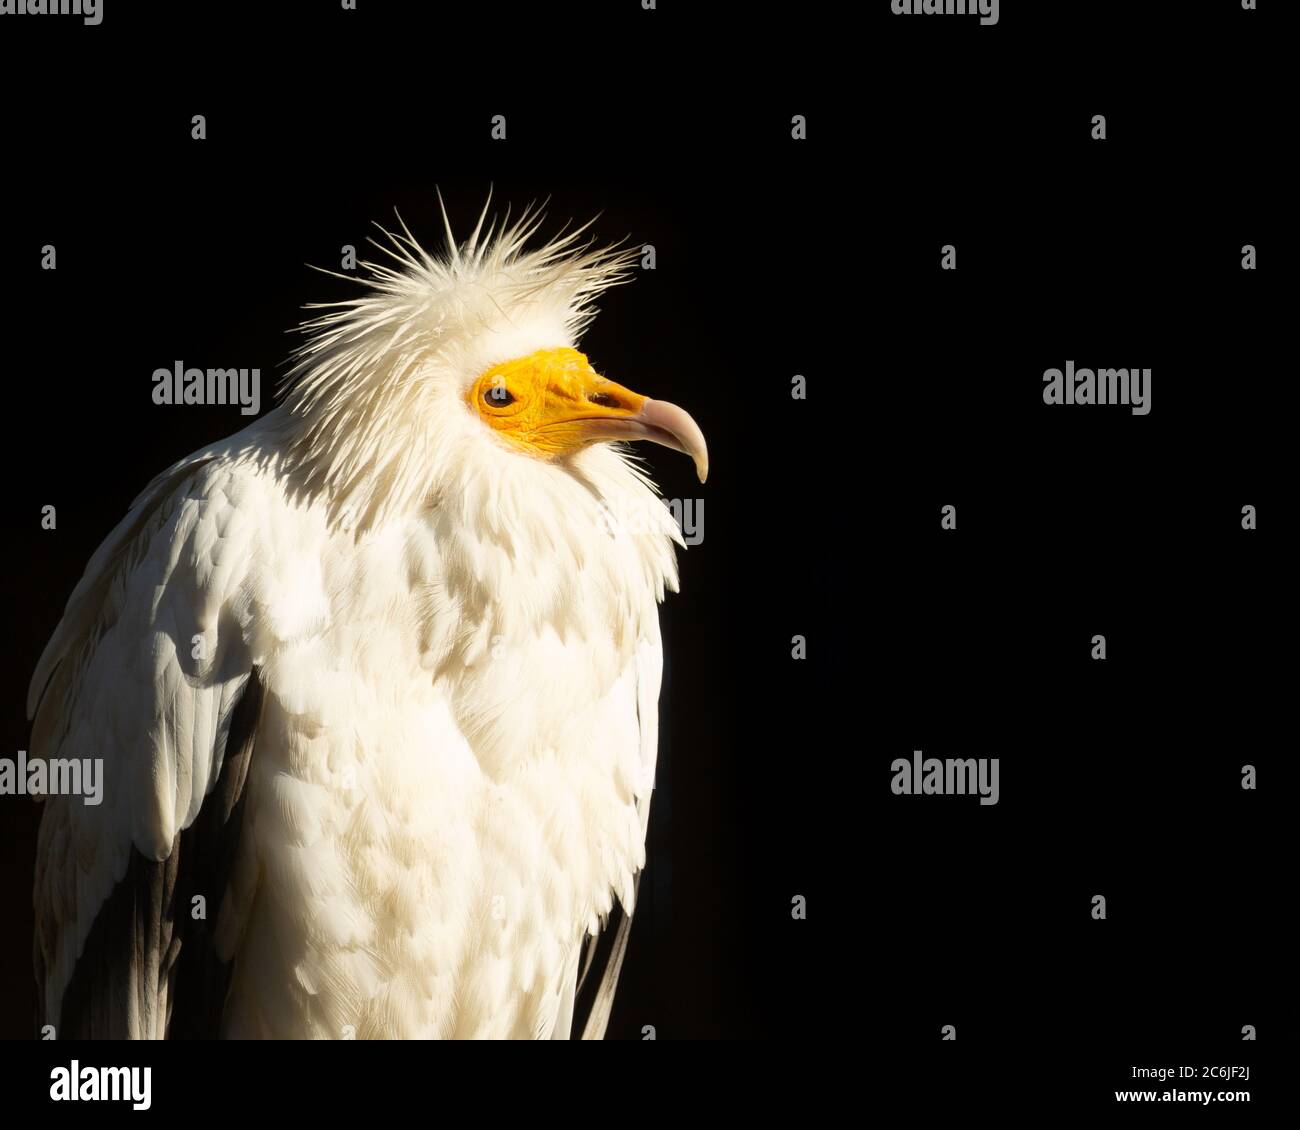 Egyptian vulture, dark blurred background Stock Photo